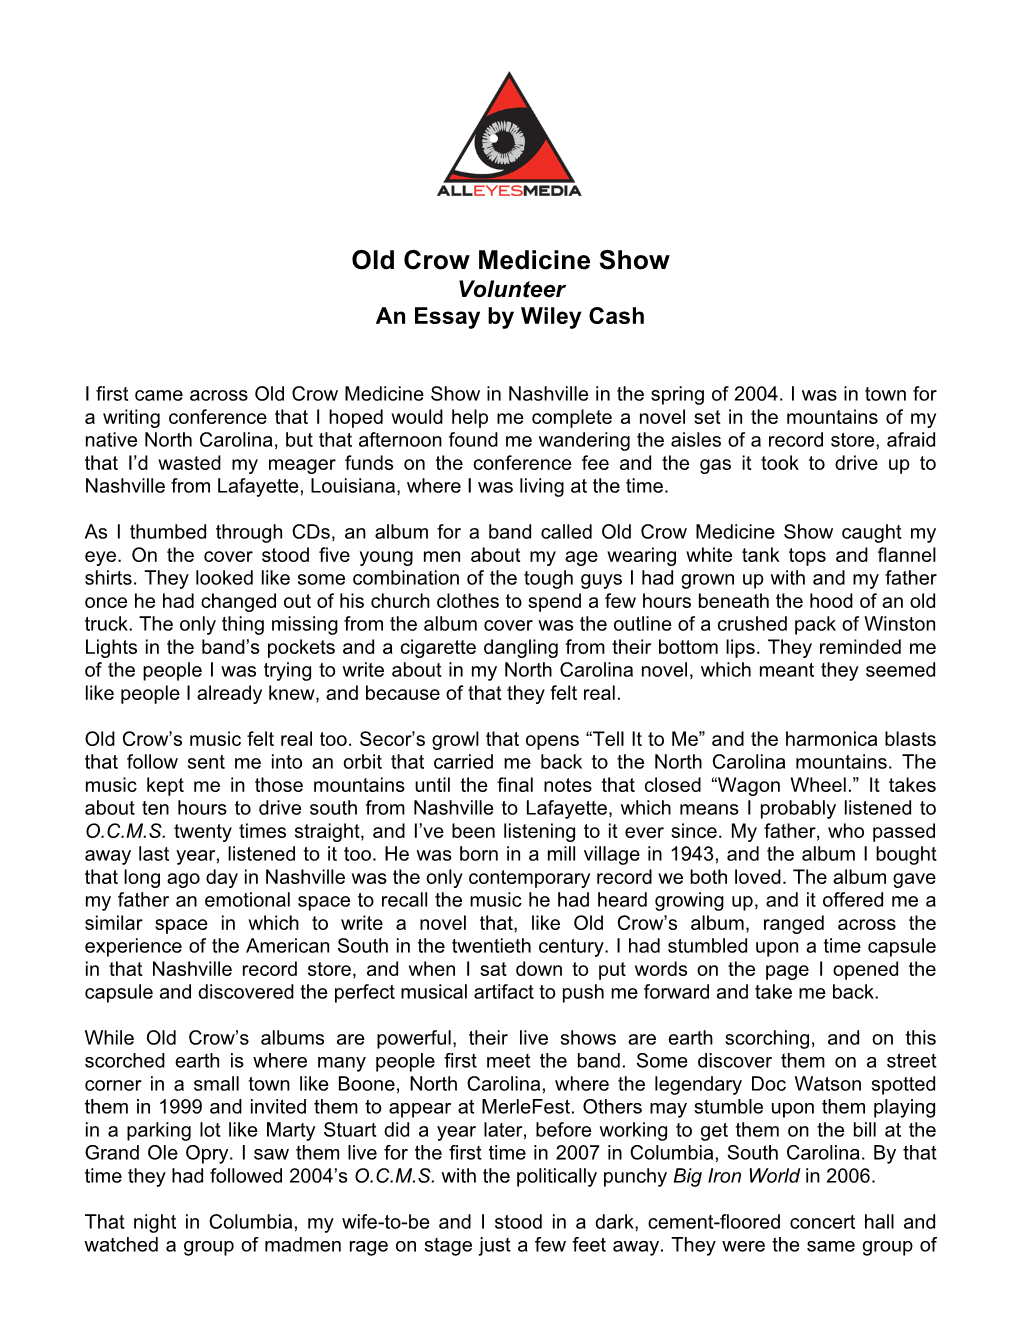 Old Crow Medicine Show Volunteer an Essay by Wiley Cash